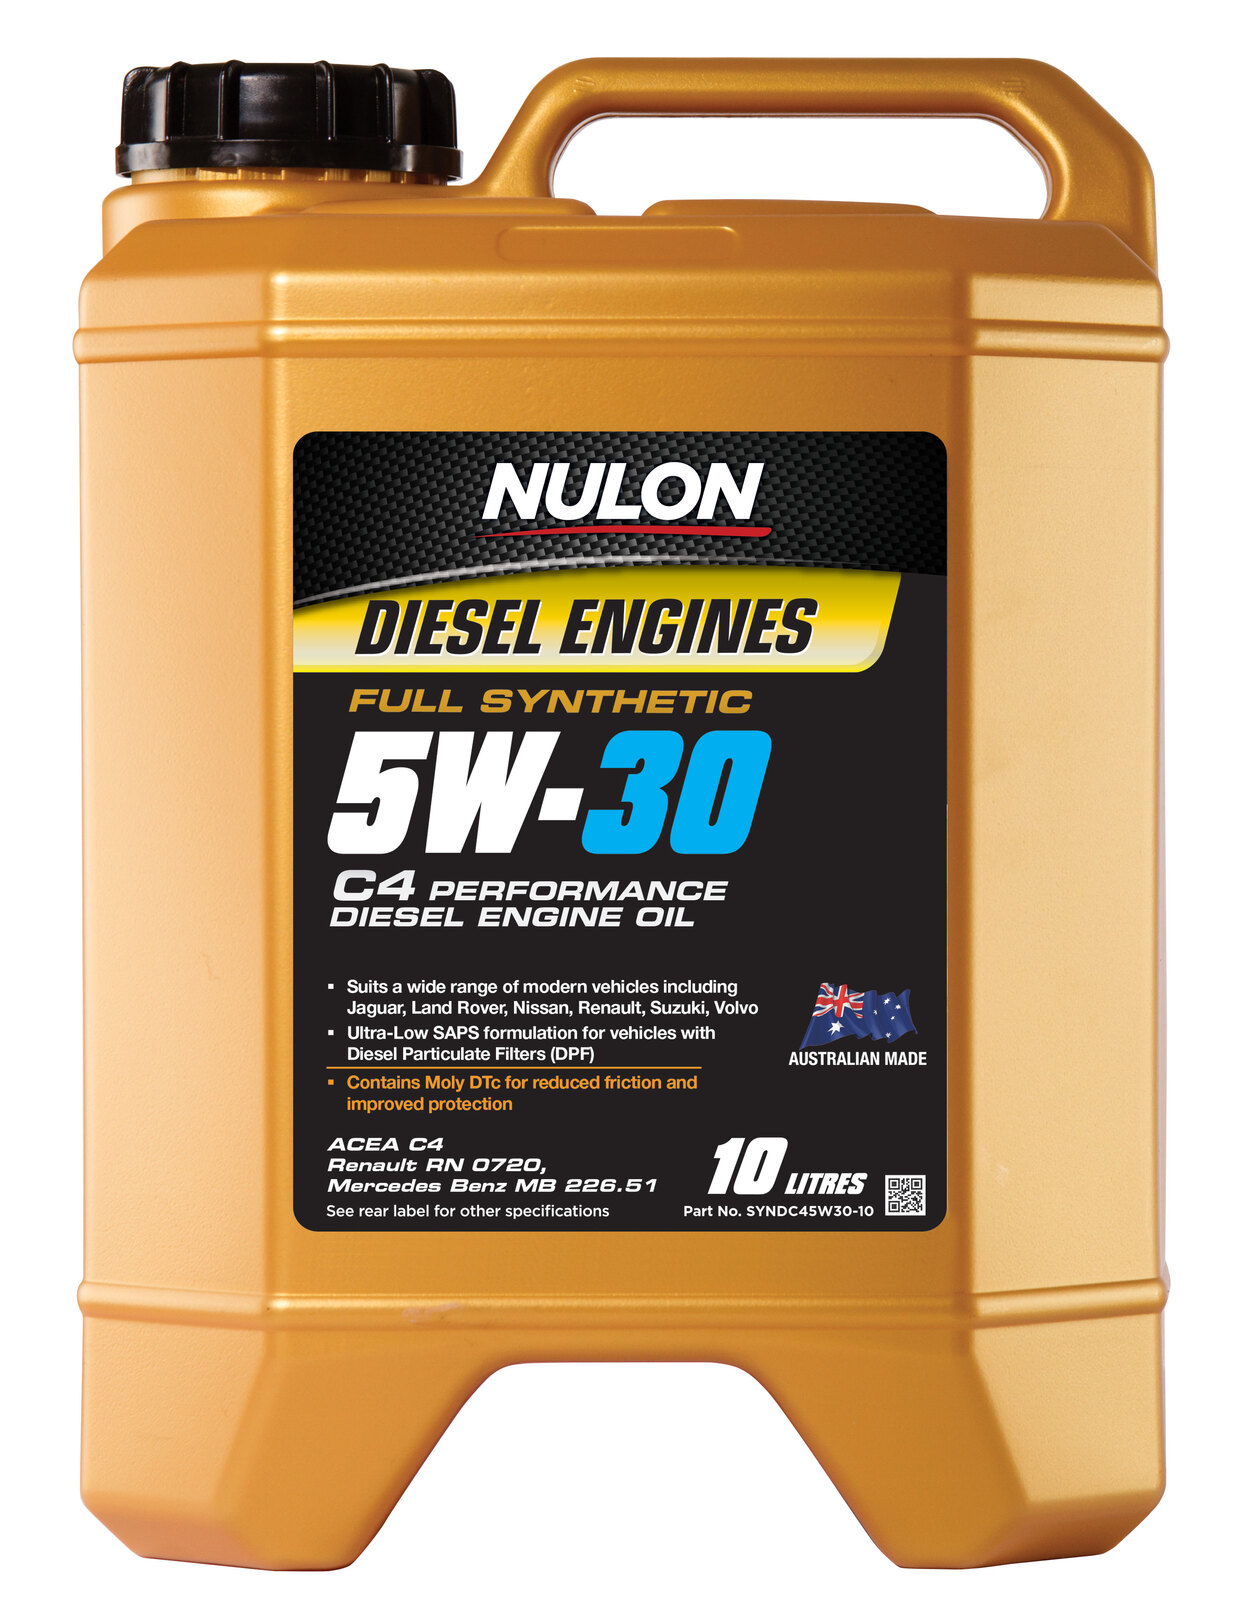 NULON Full Synthetic 5W-30 C4 Performance Dies, Each